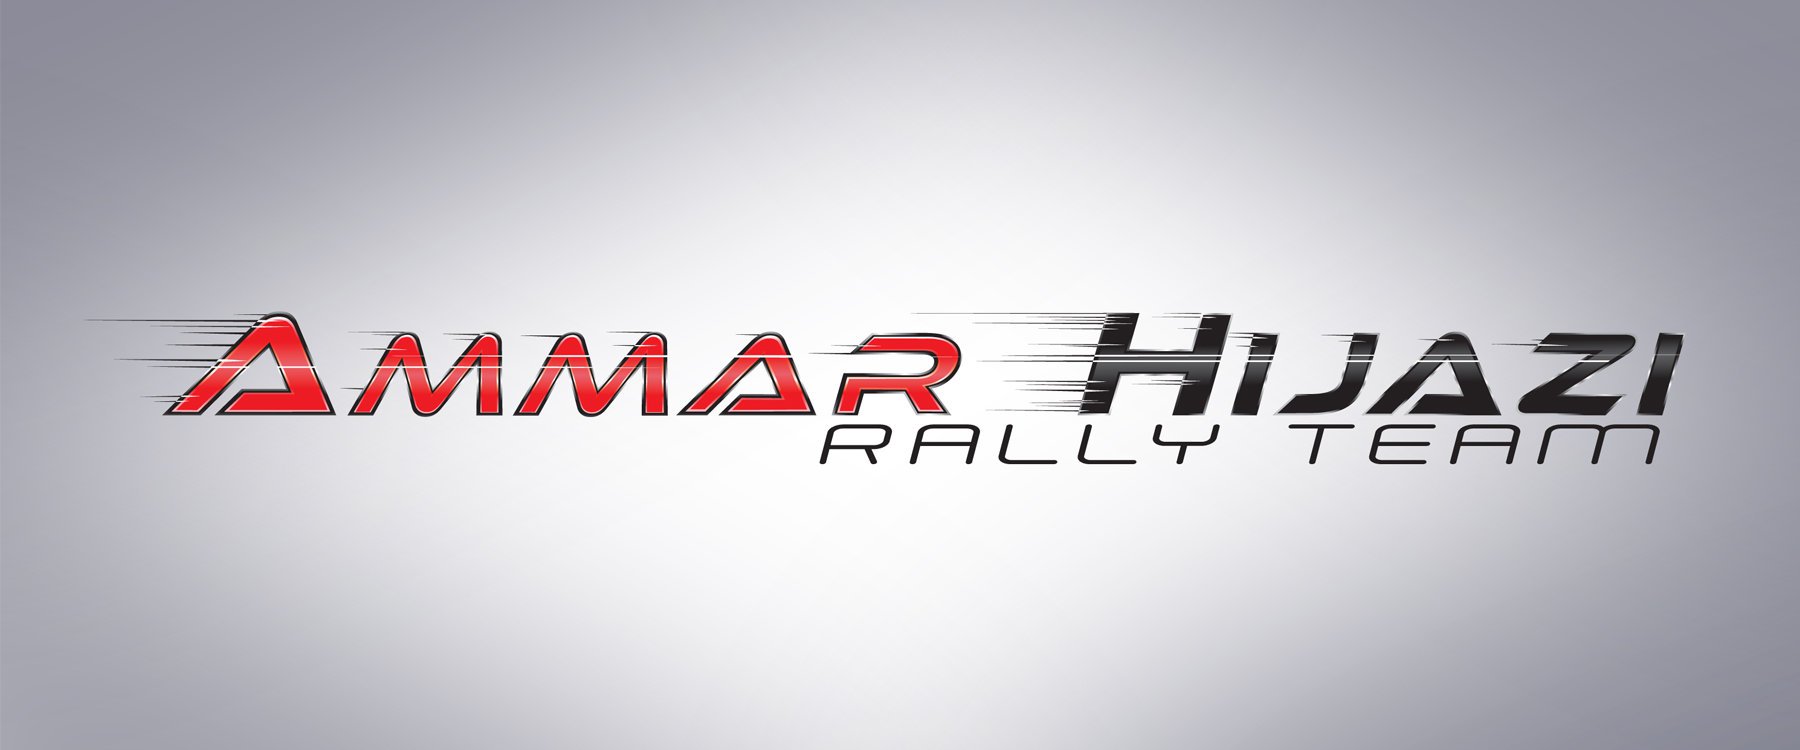 Ammar Hijazi Rally Team #1